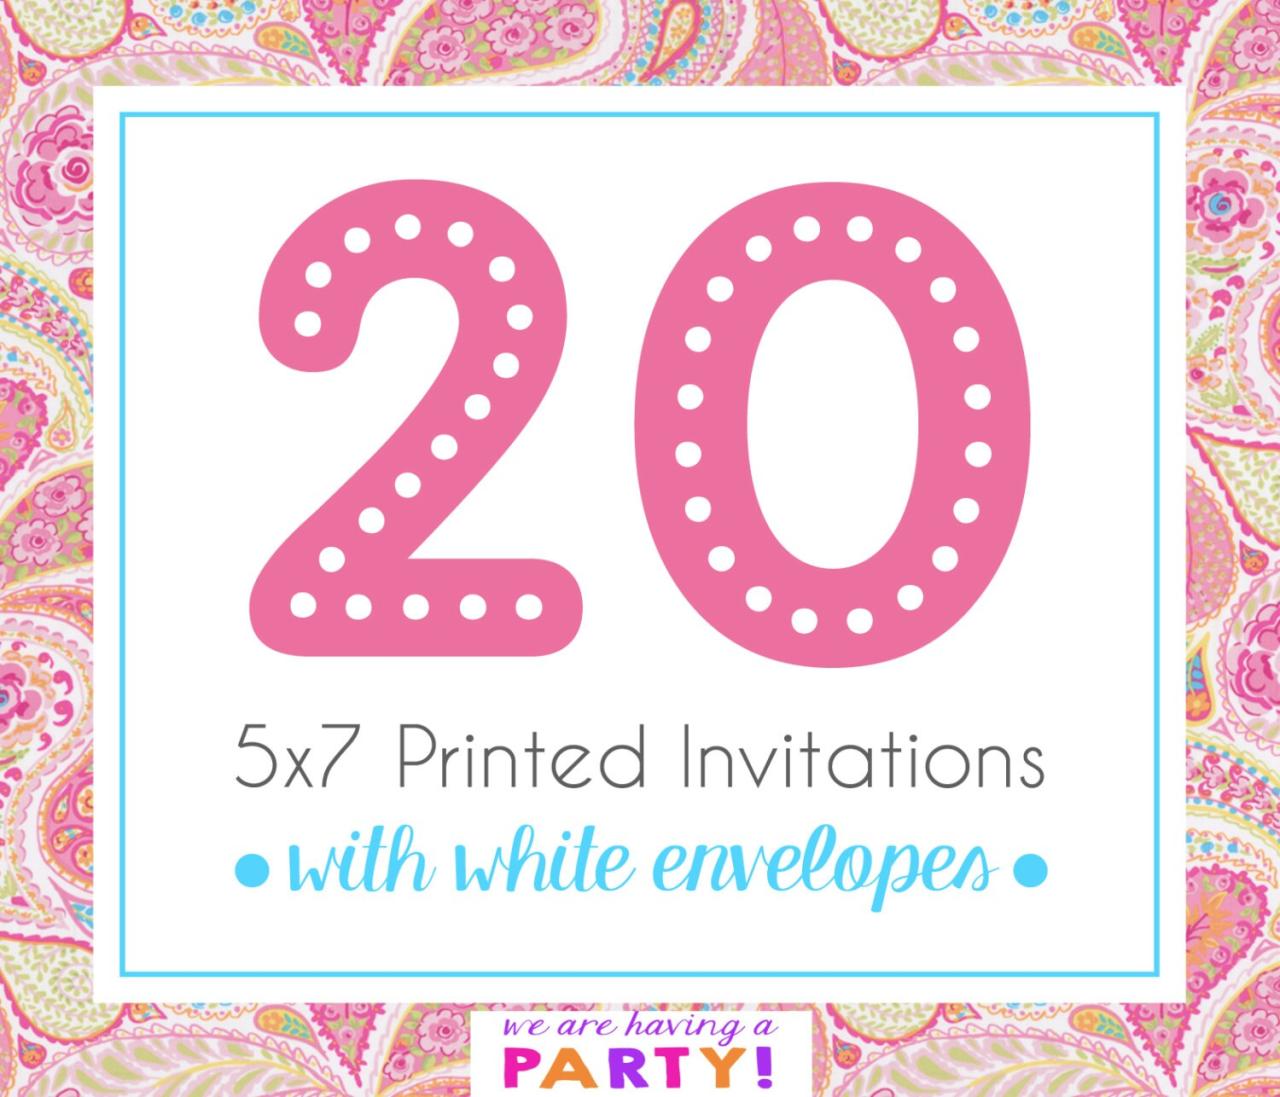 20 5x7 Invitations with White Envelopes Professionally | Etsy